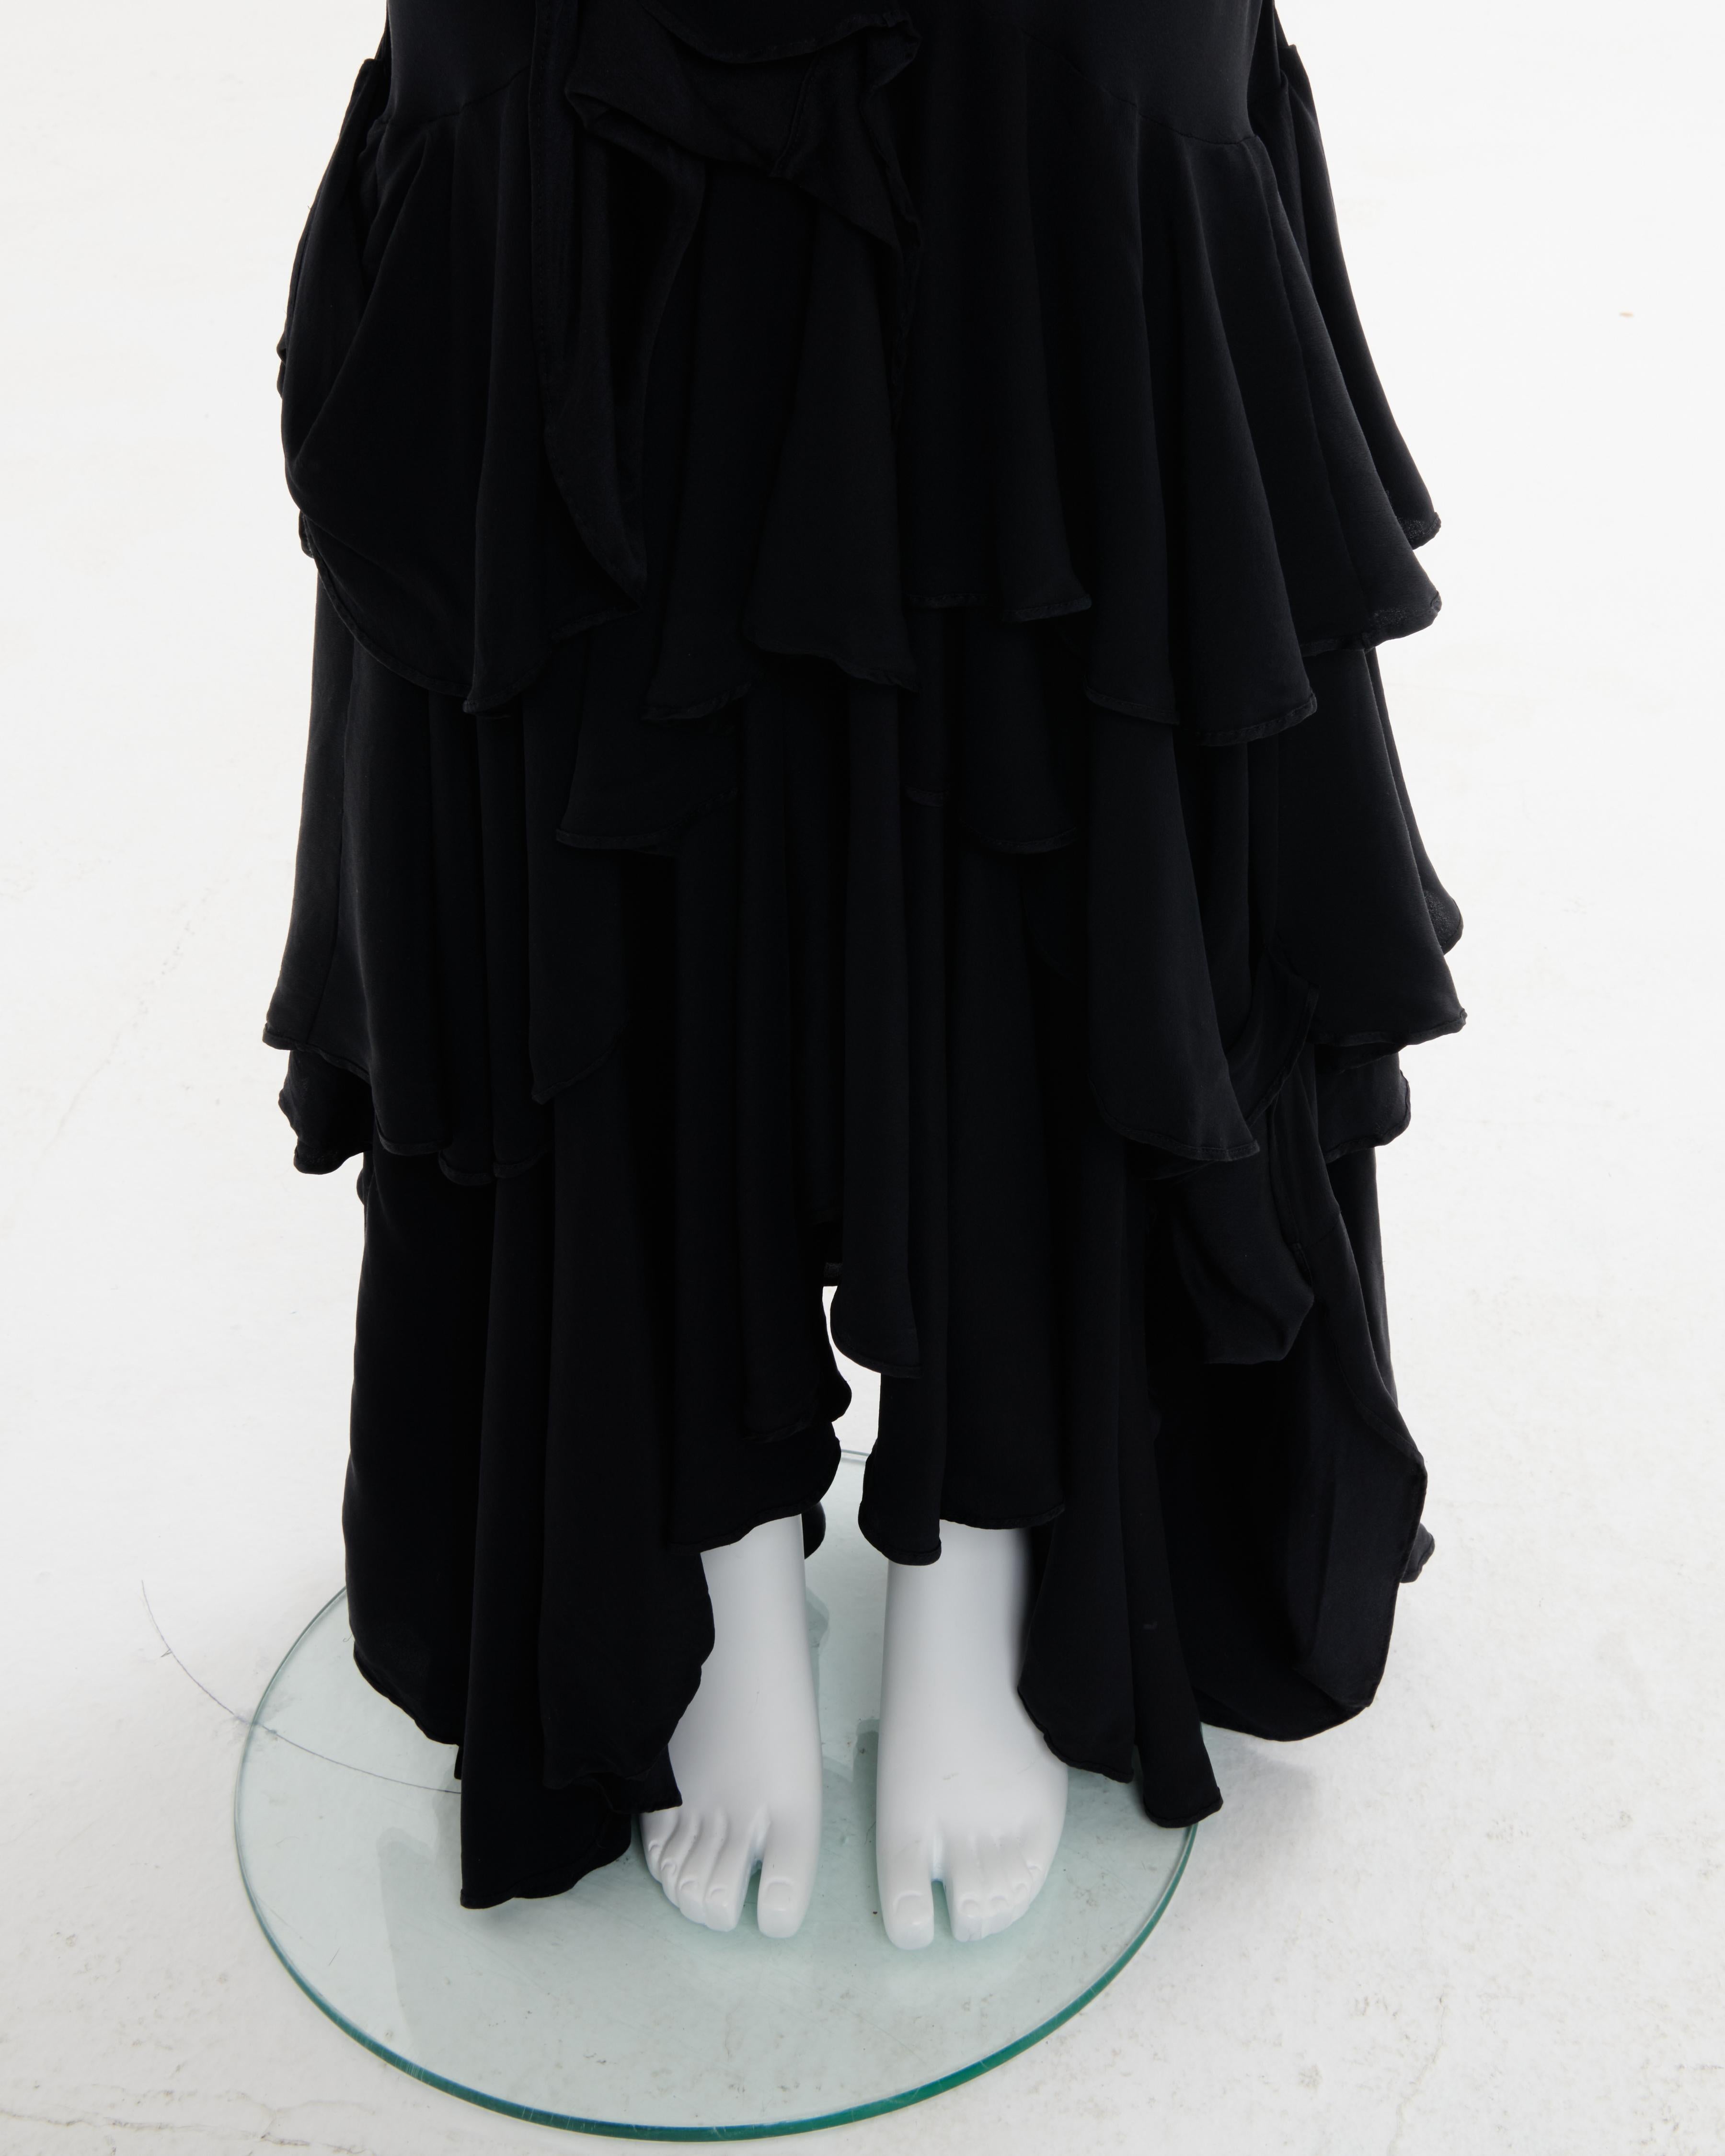 Christian Dior by John Galliano F/W 2006 Black silk bias-cut evening dress 8